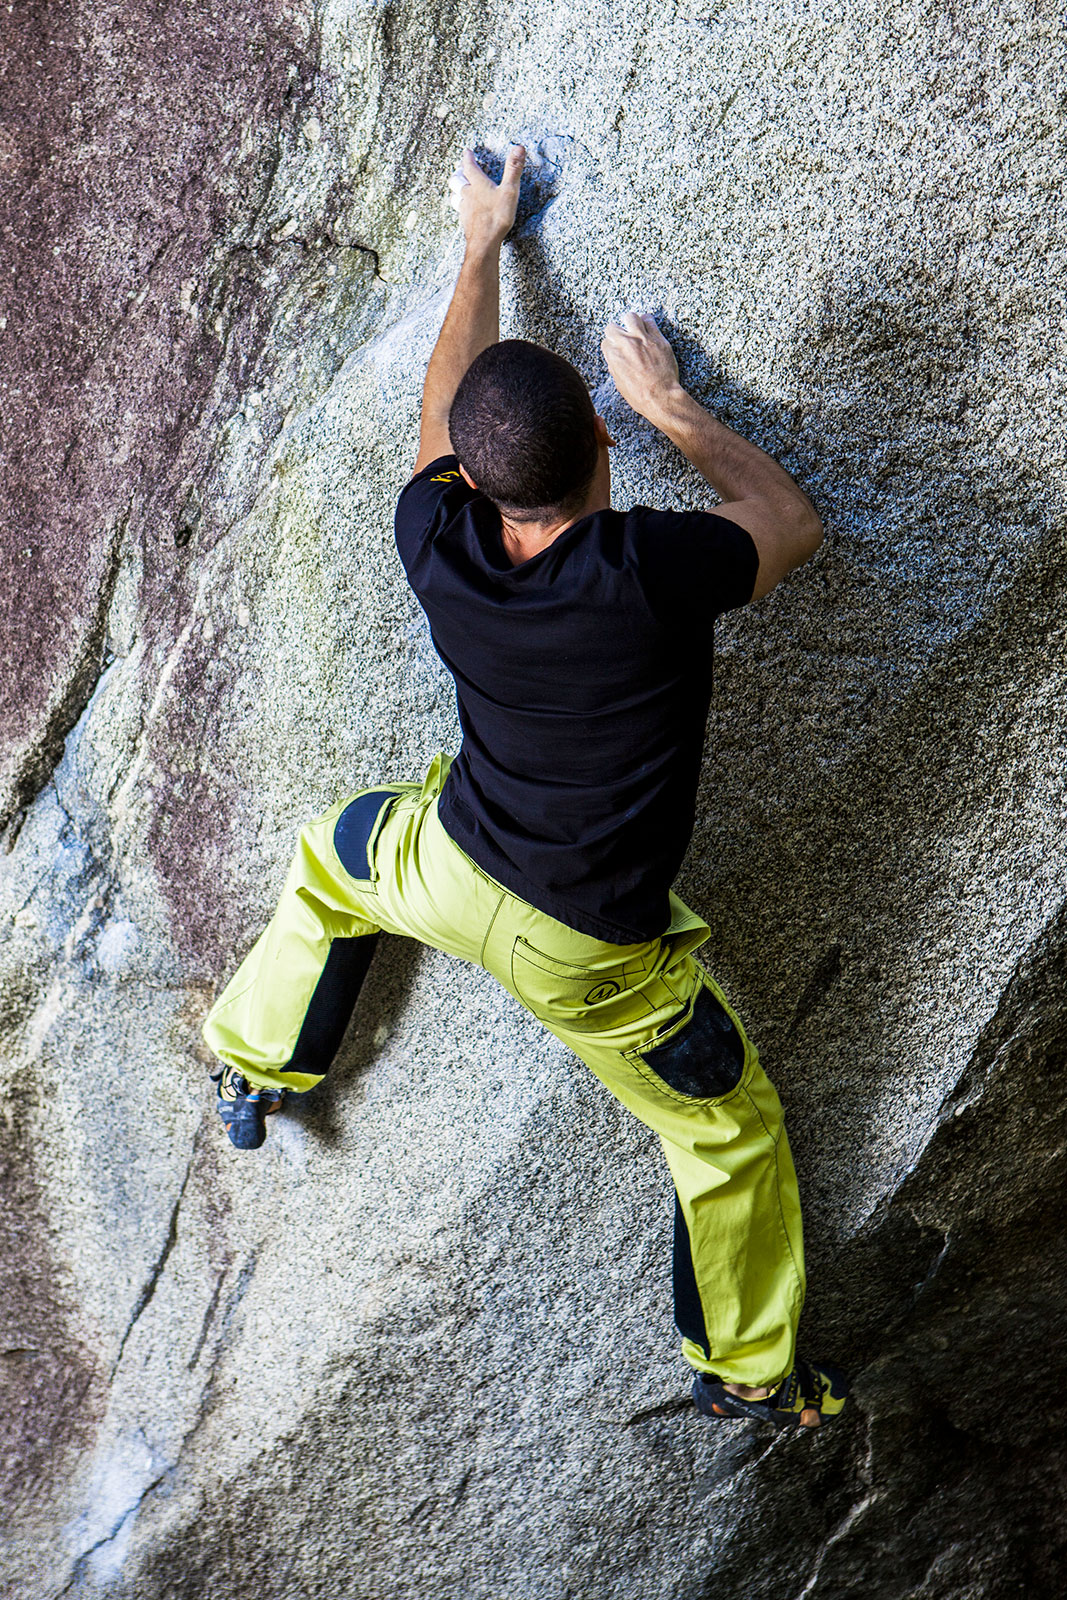 Women's trousers KATY ⋆ climbing - bouldering trousers ⋆ MONVIC